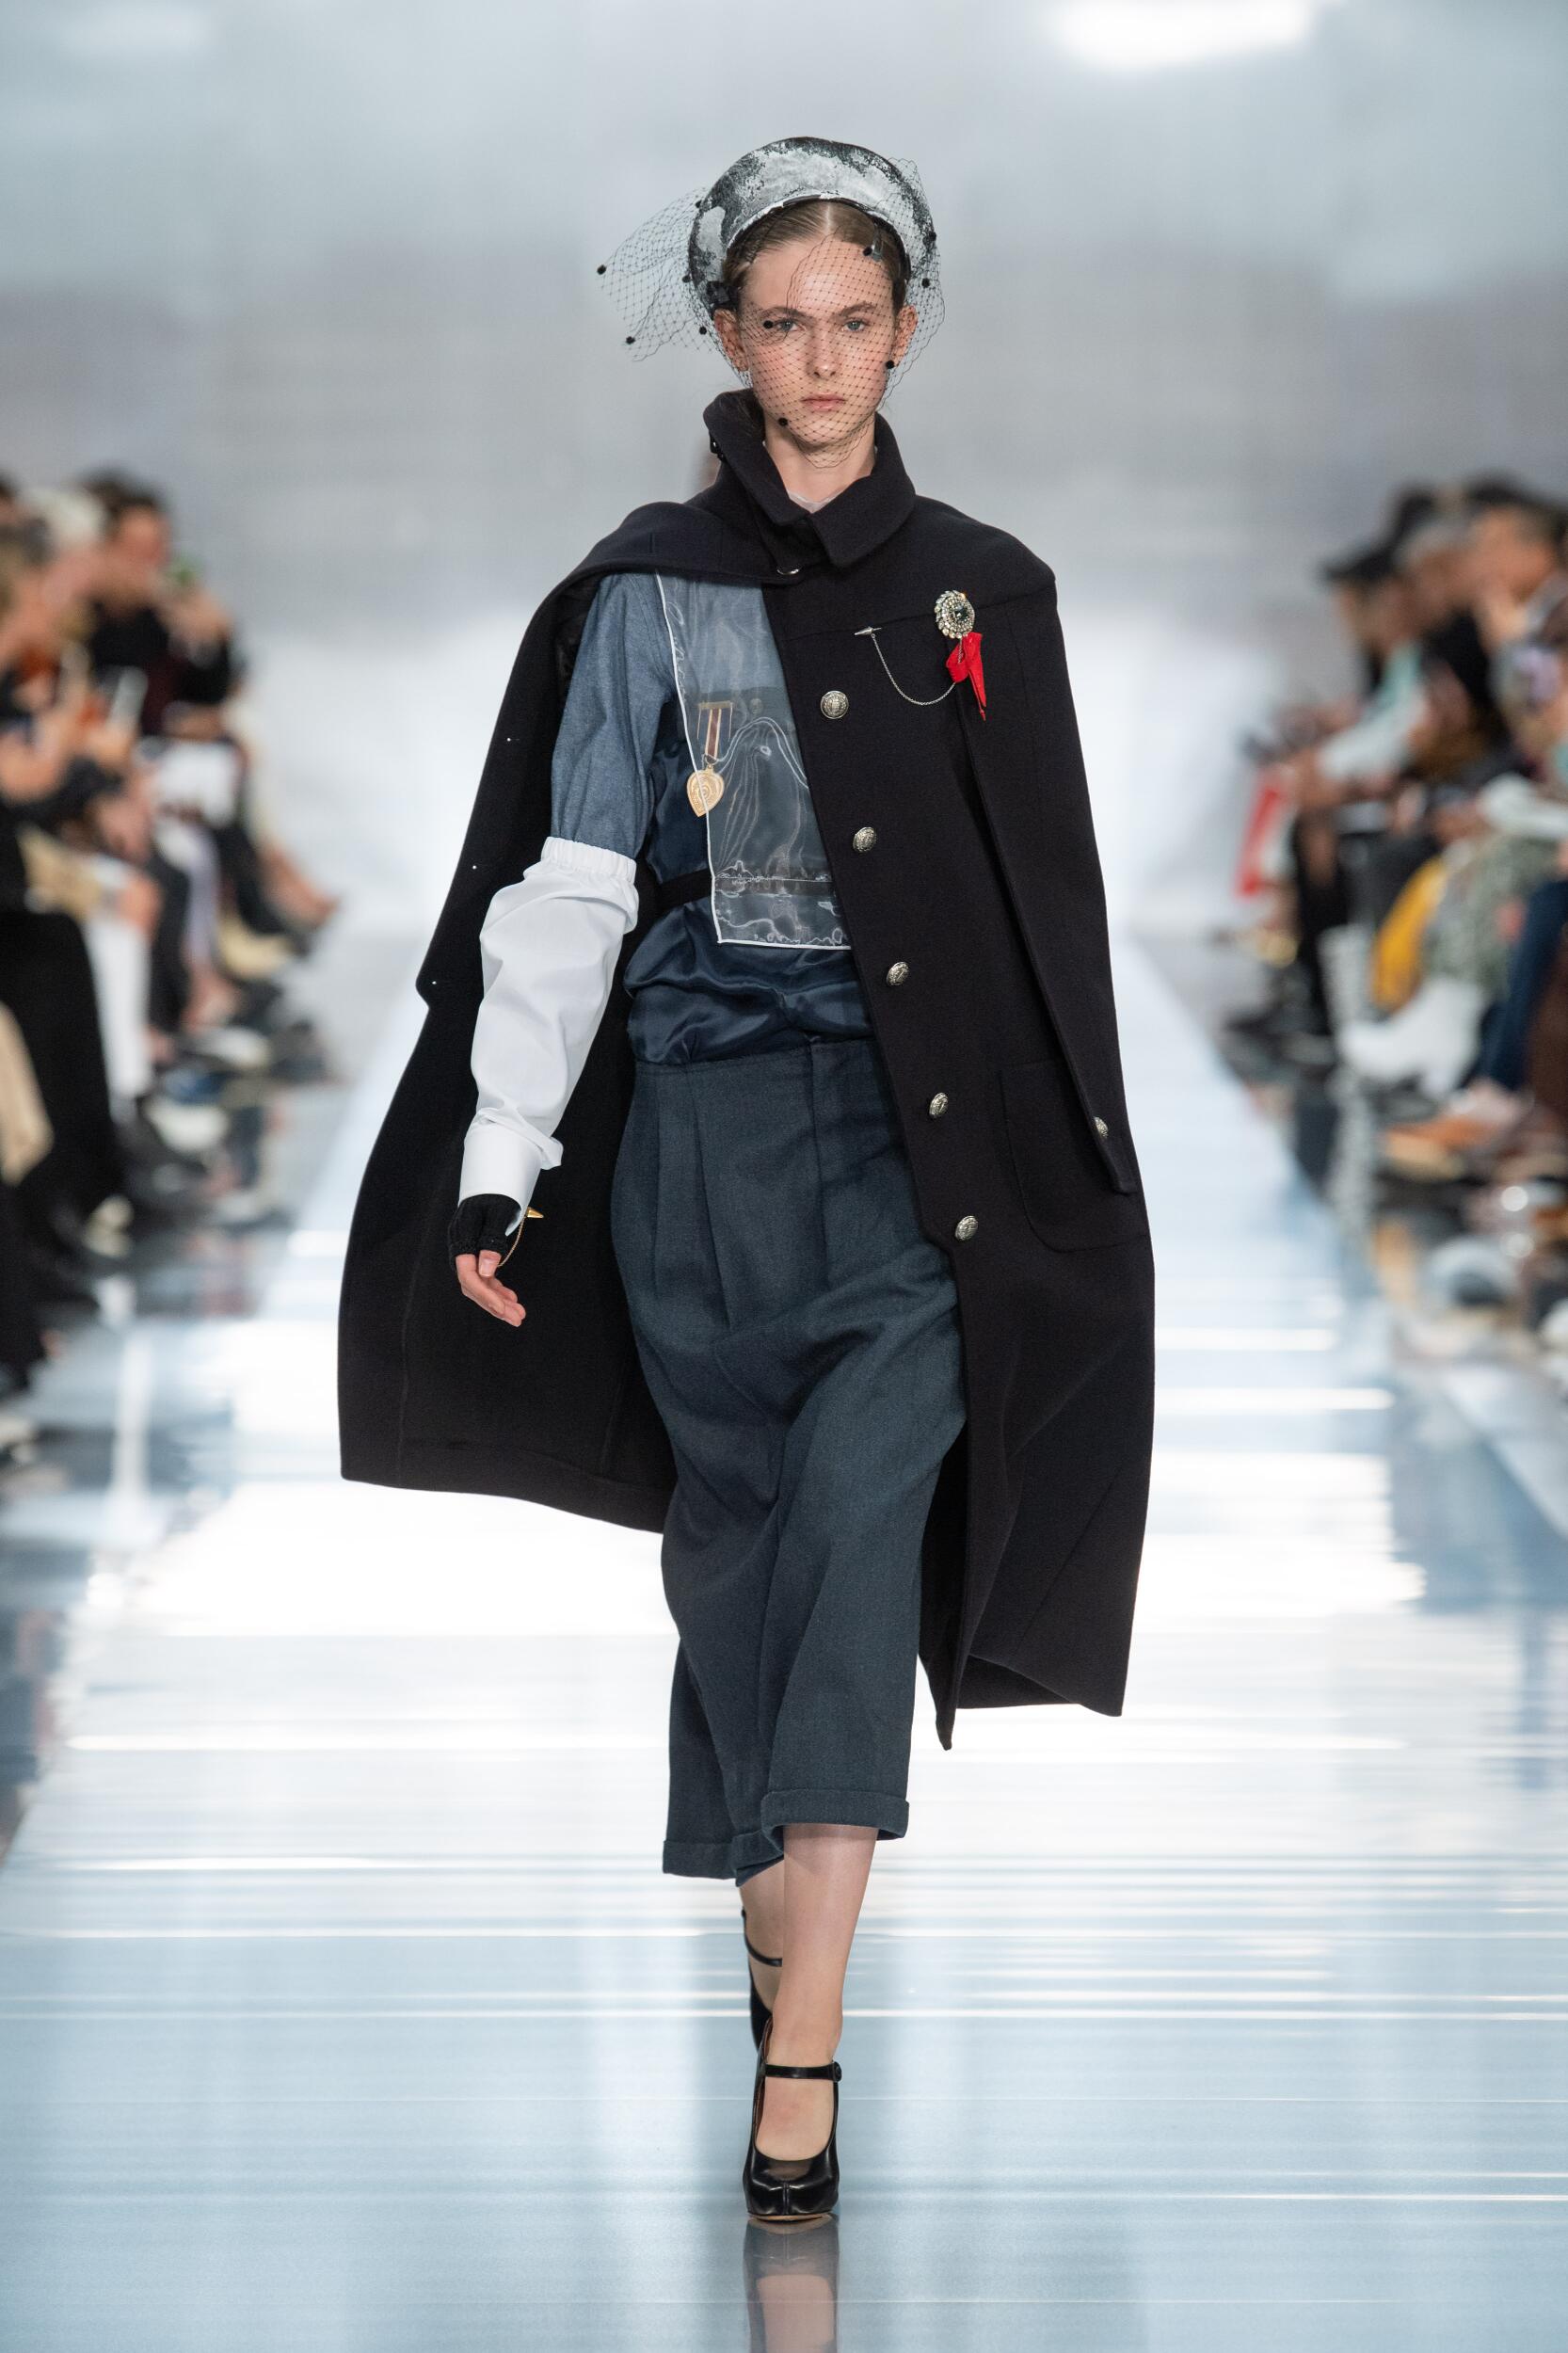 Liberate men with satin and corsets: fashion icon Galliano